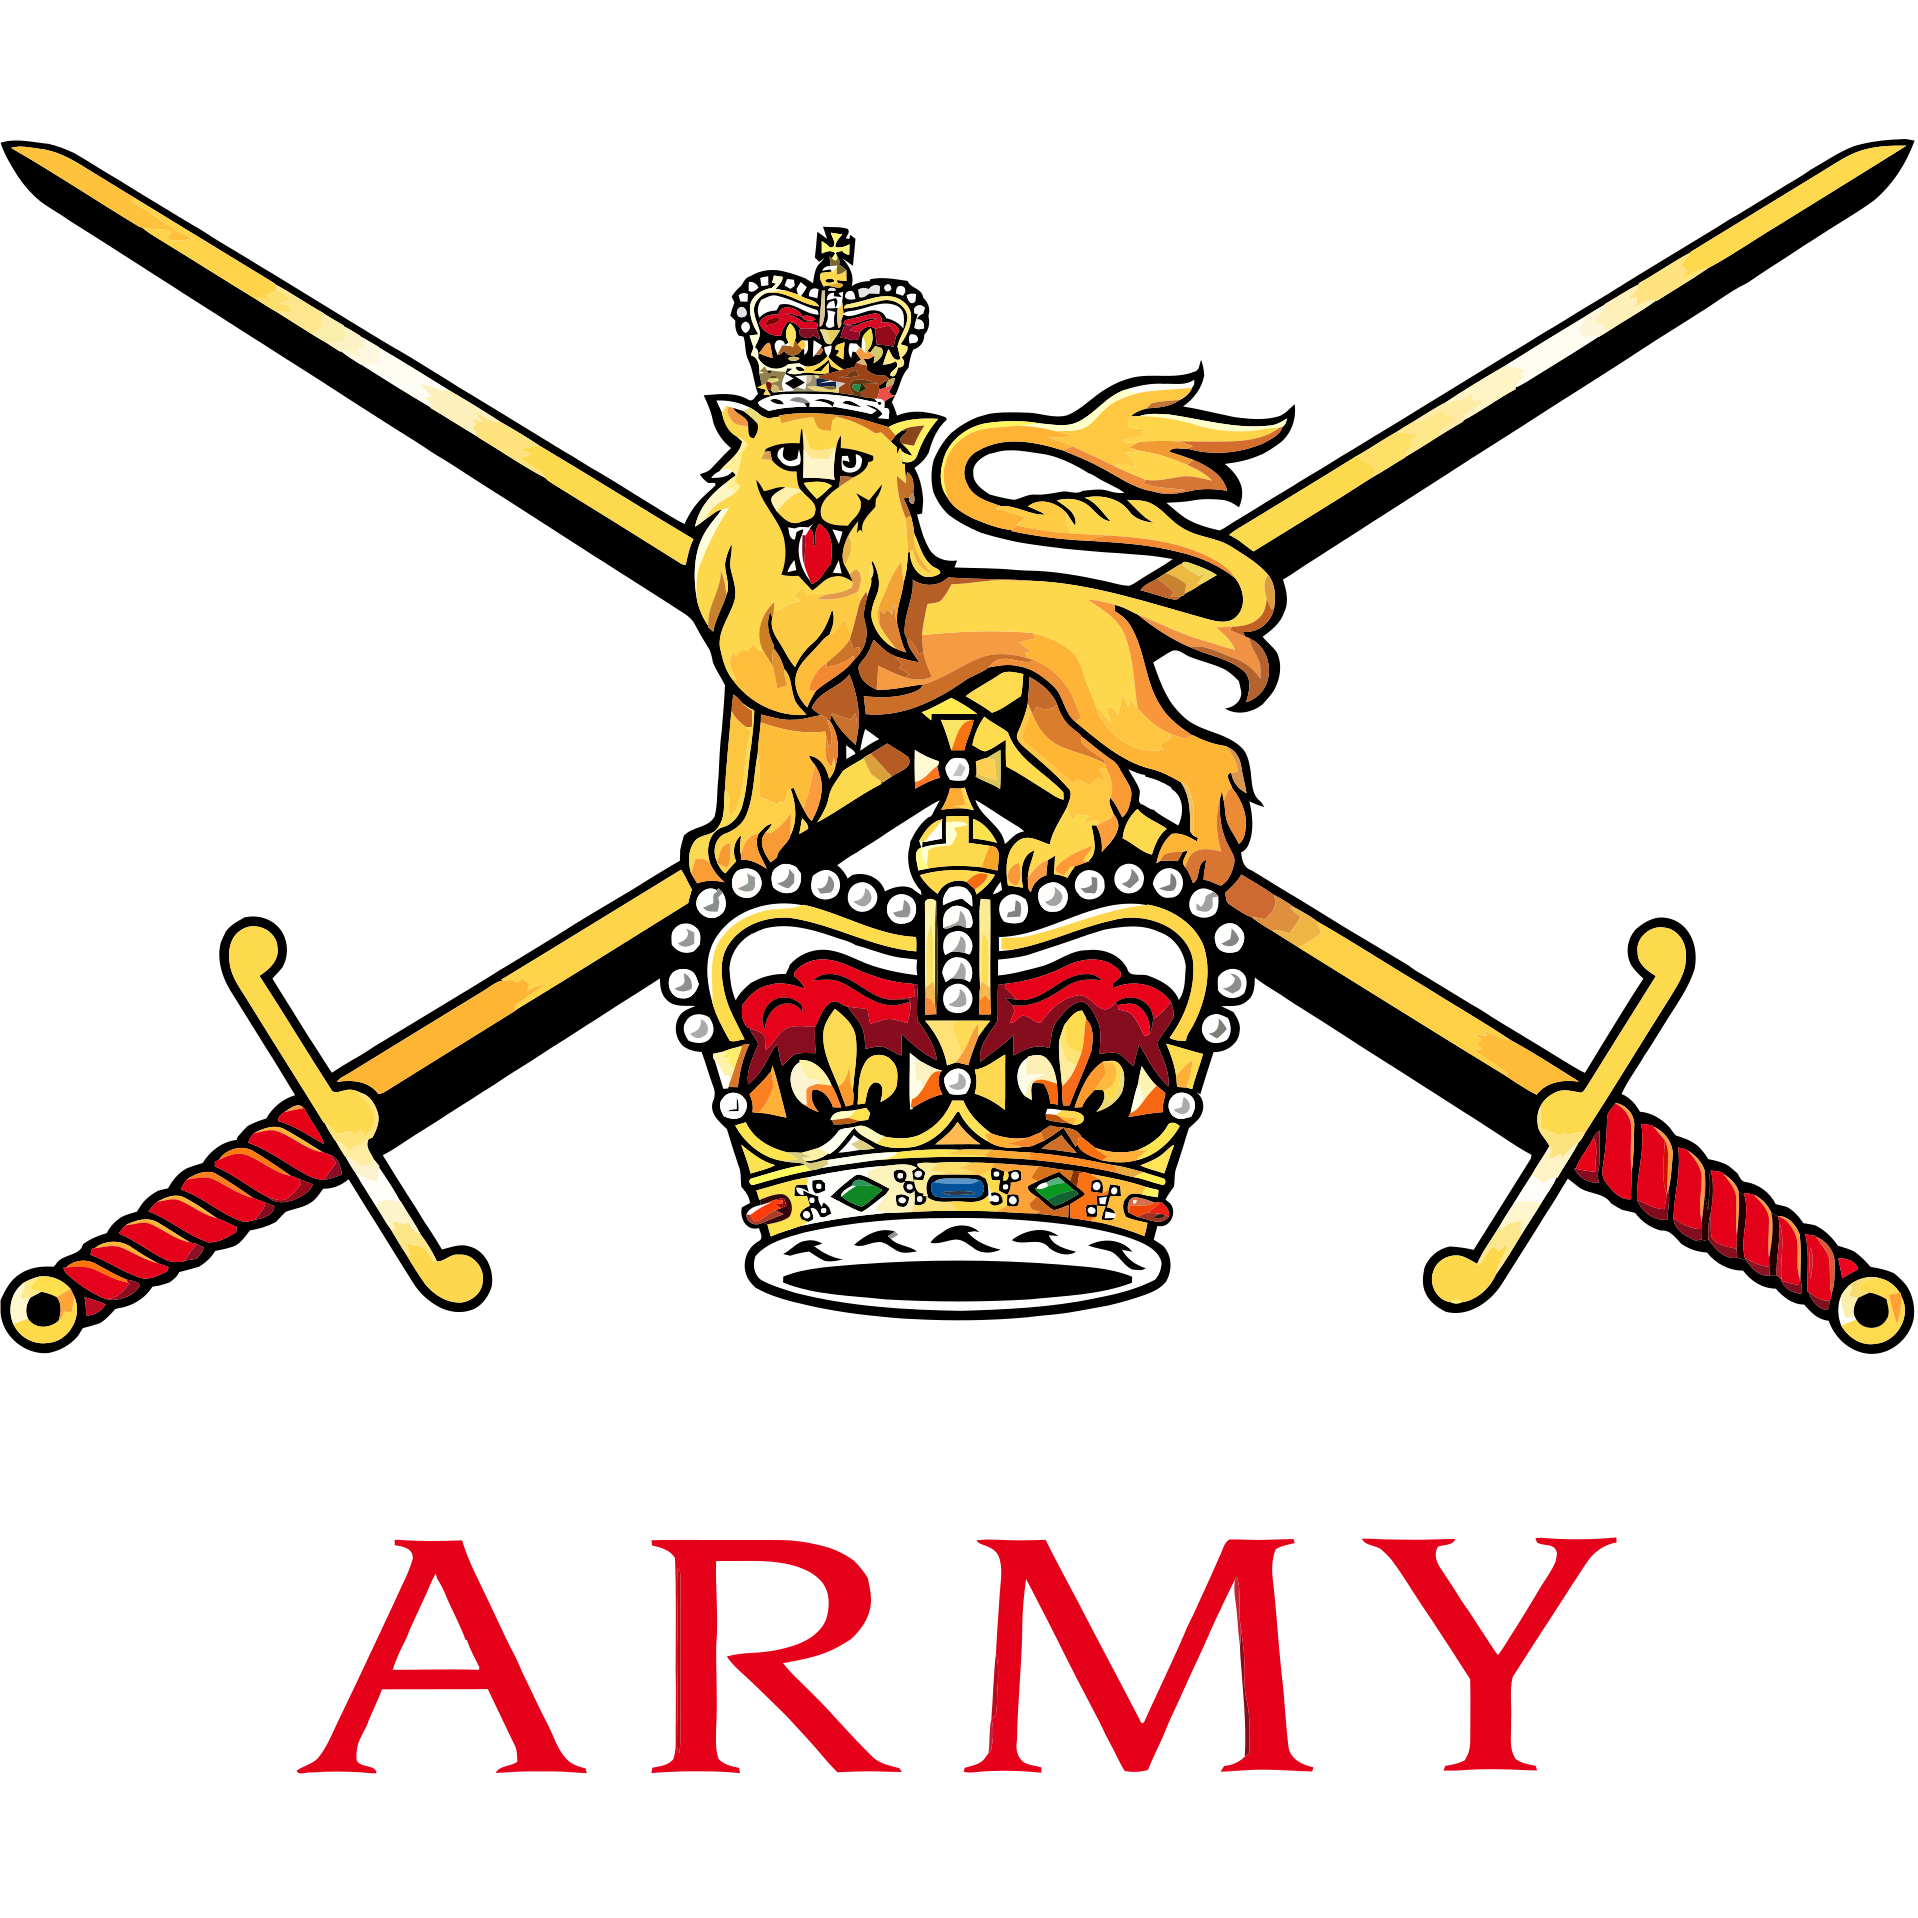 Armeebritannique ancien logo